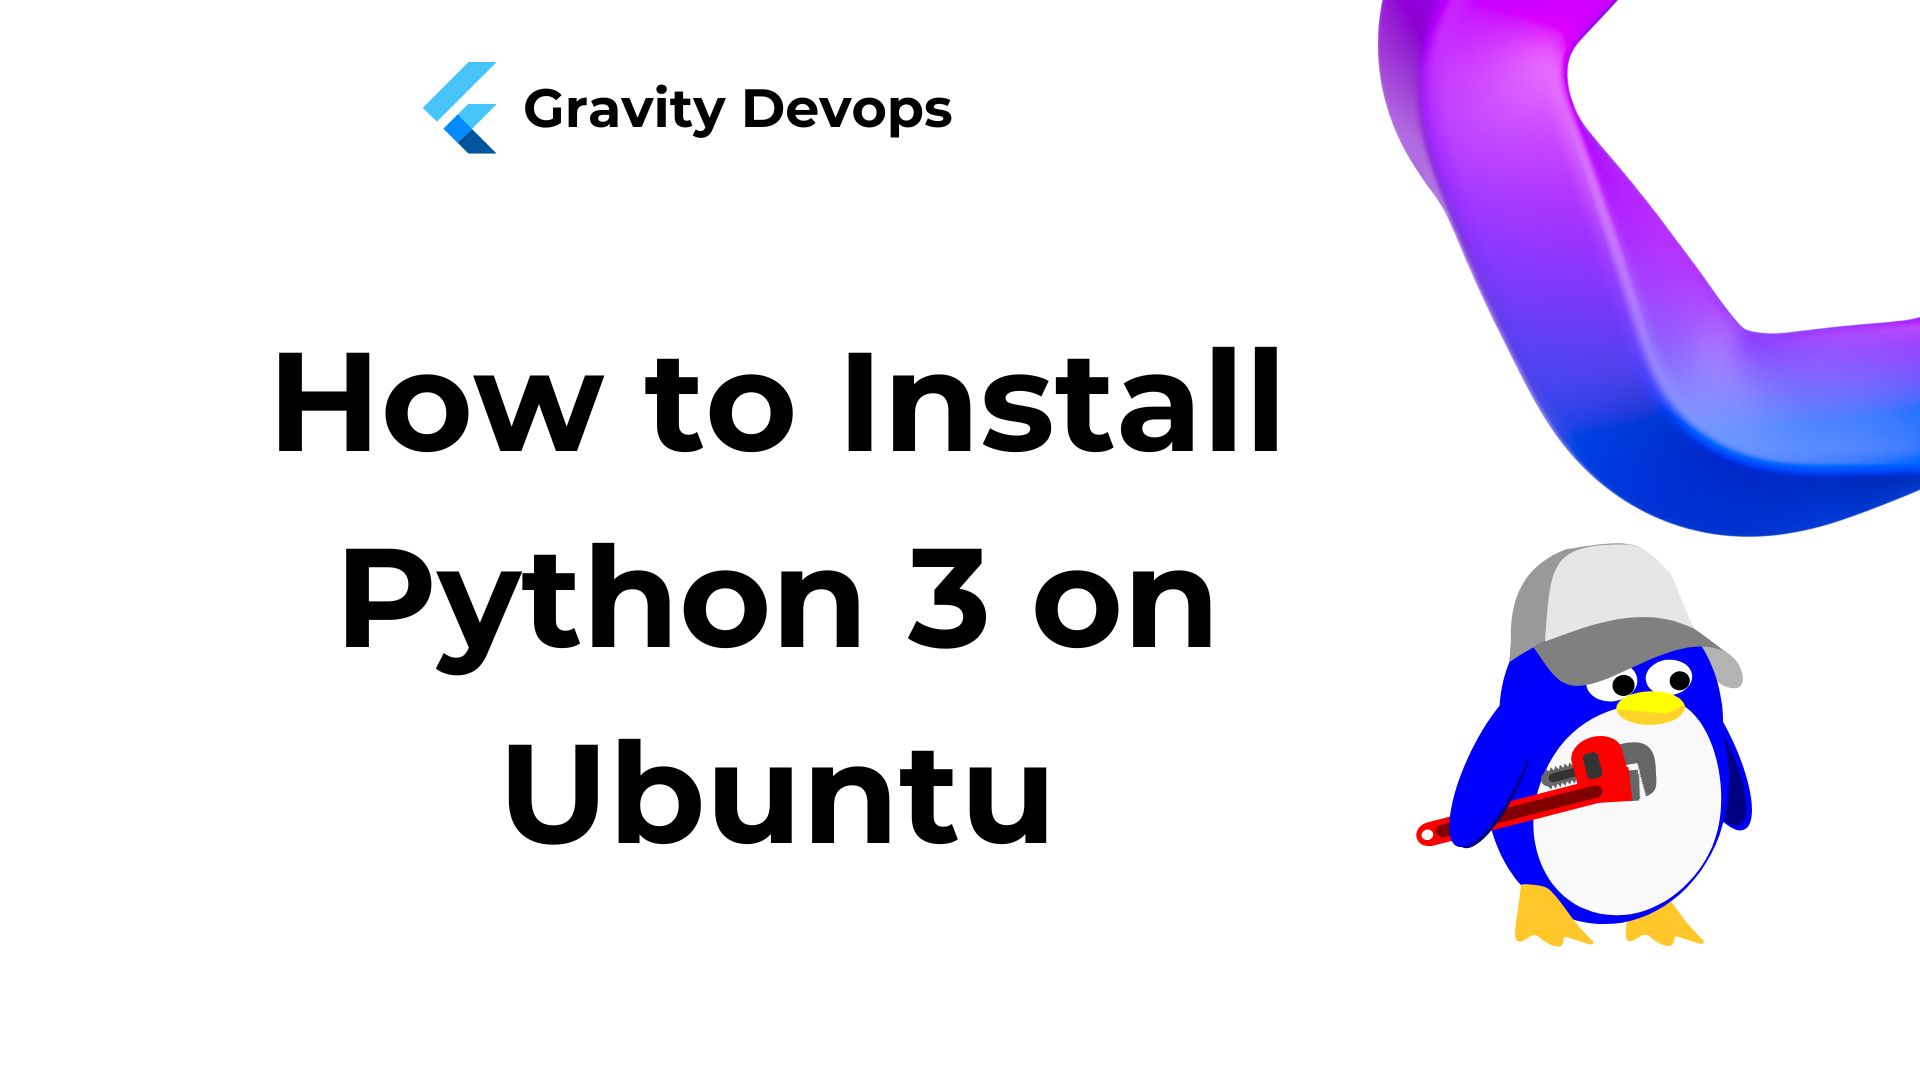 How to Install Python 3 on Ubuntu